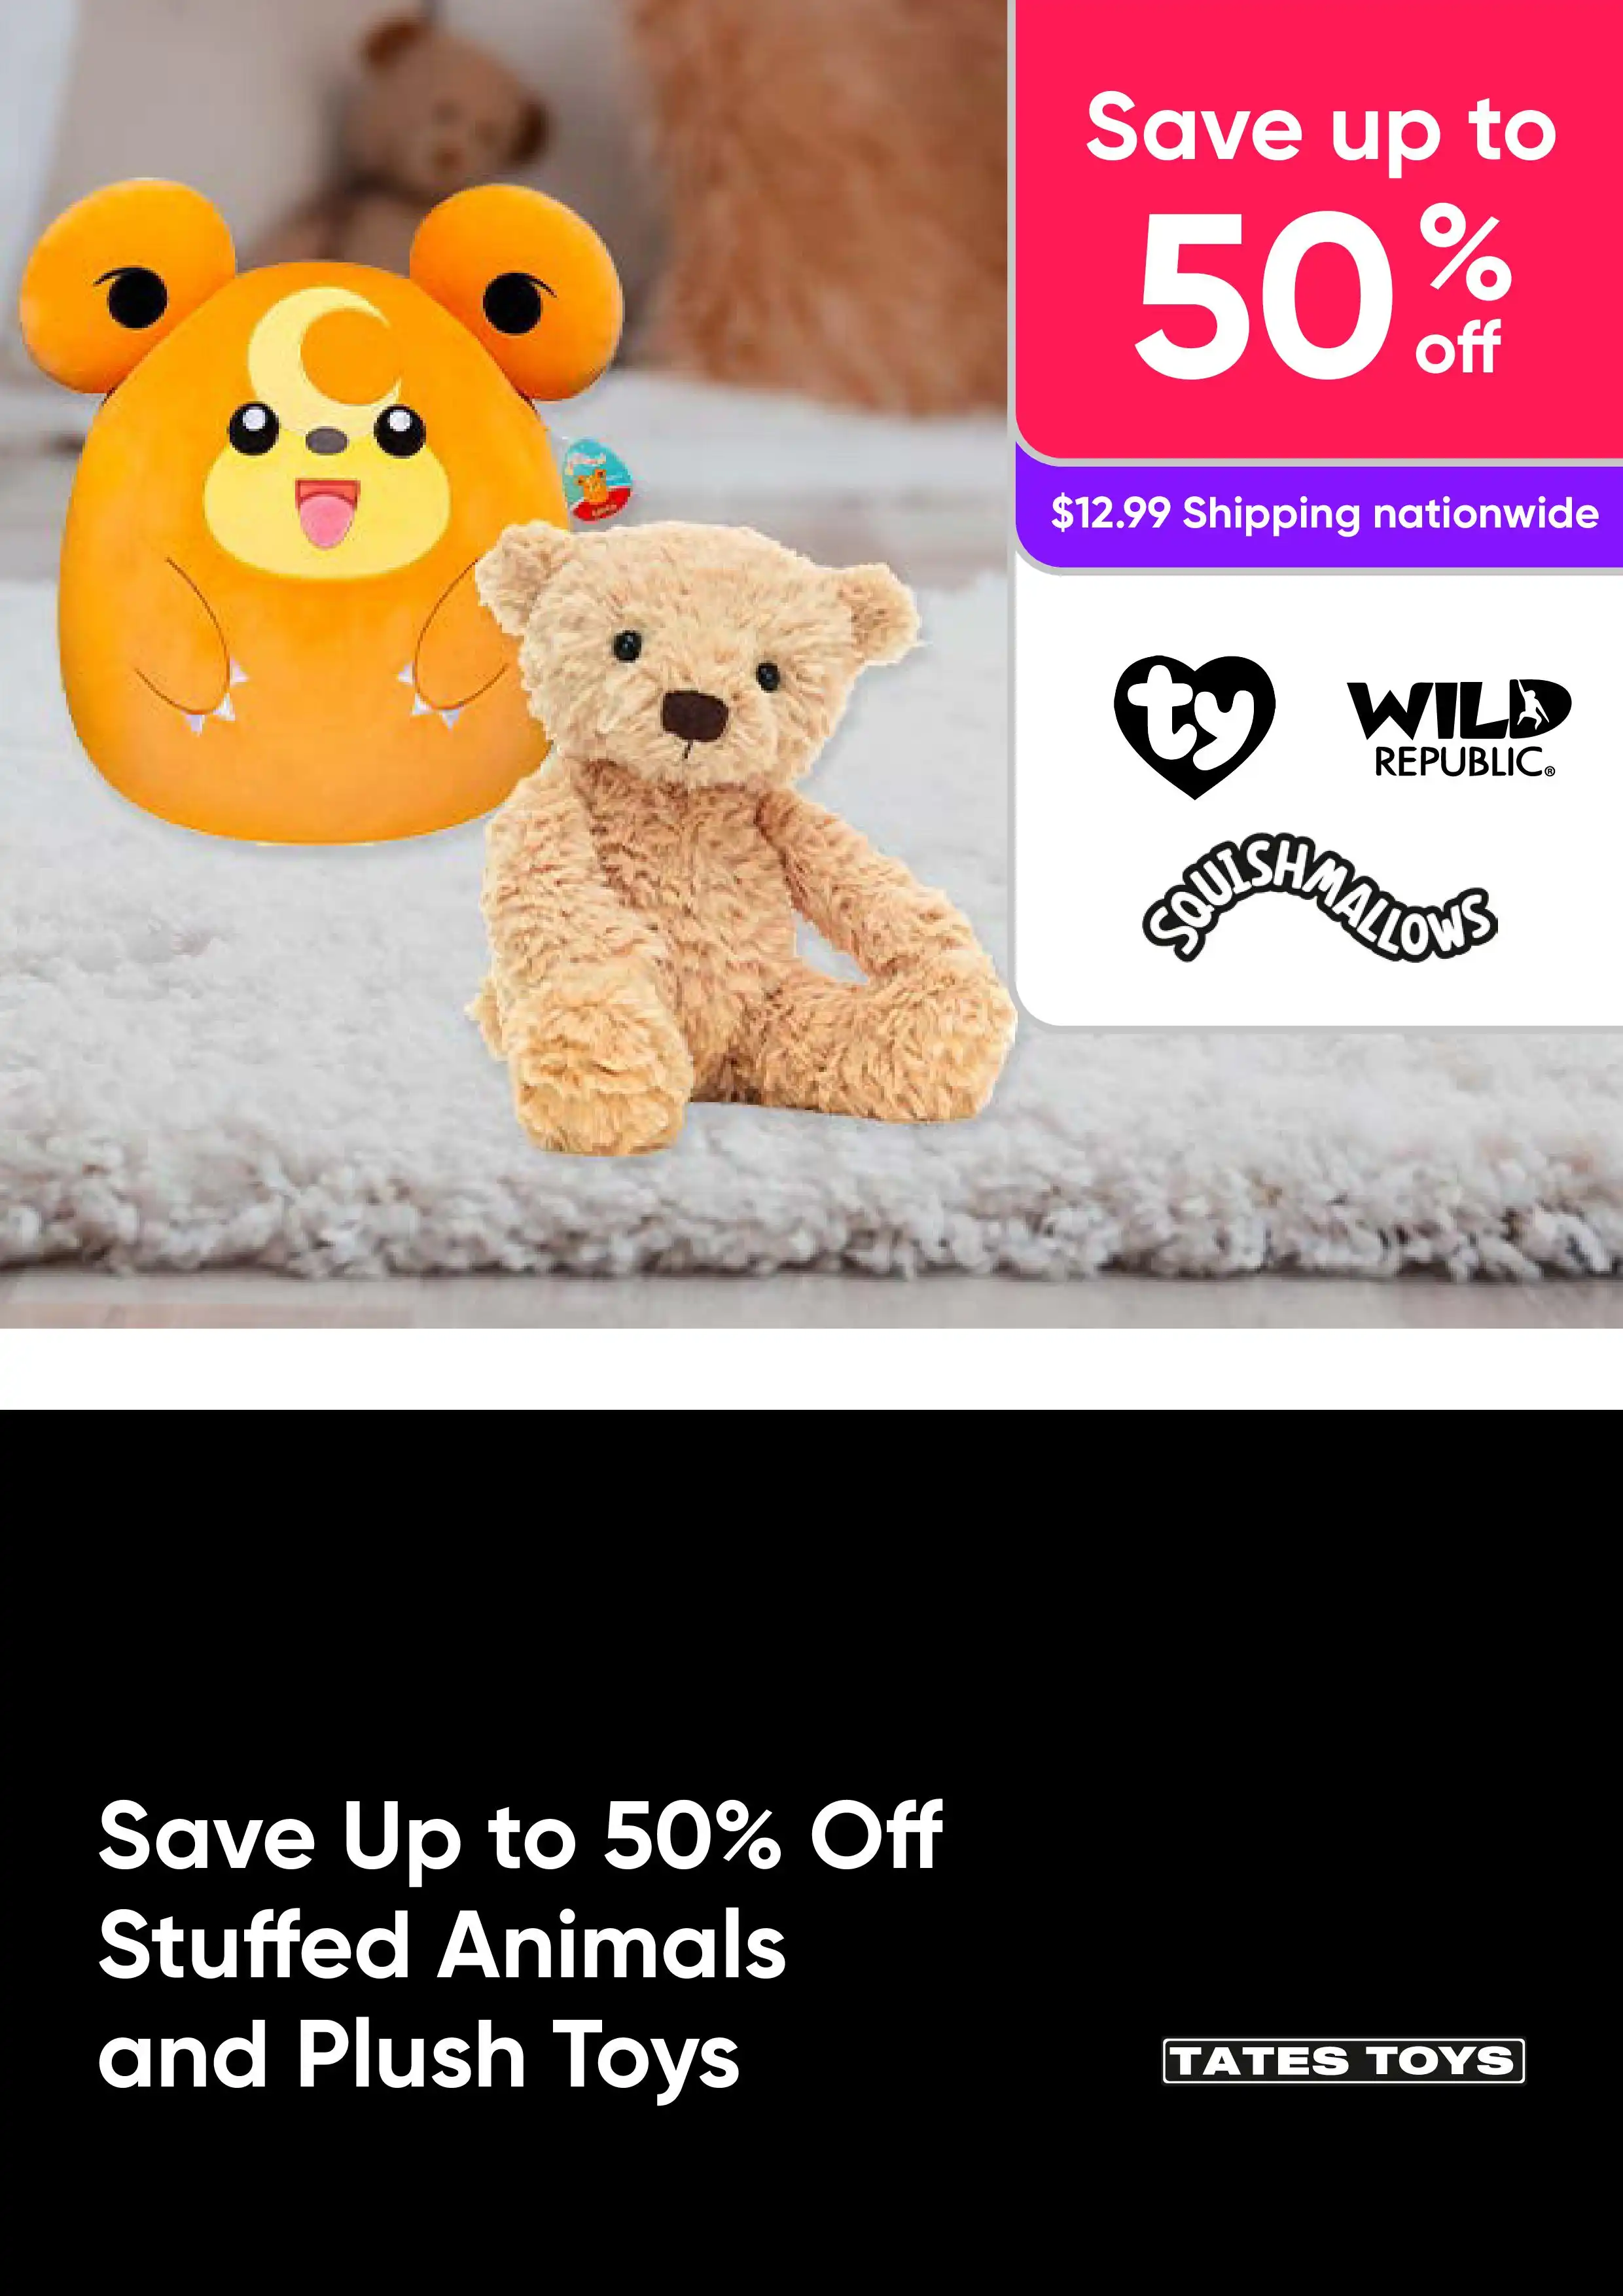 Plush Toy Bonanza - Save Up to 50% Off Stuffed Animals and Plush Toys